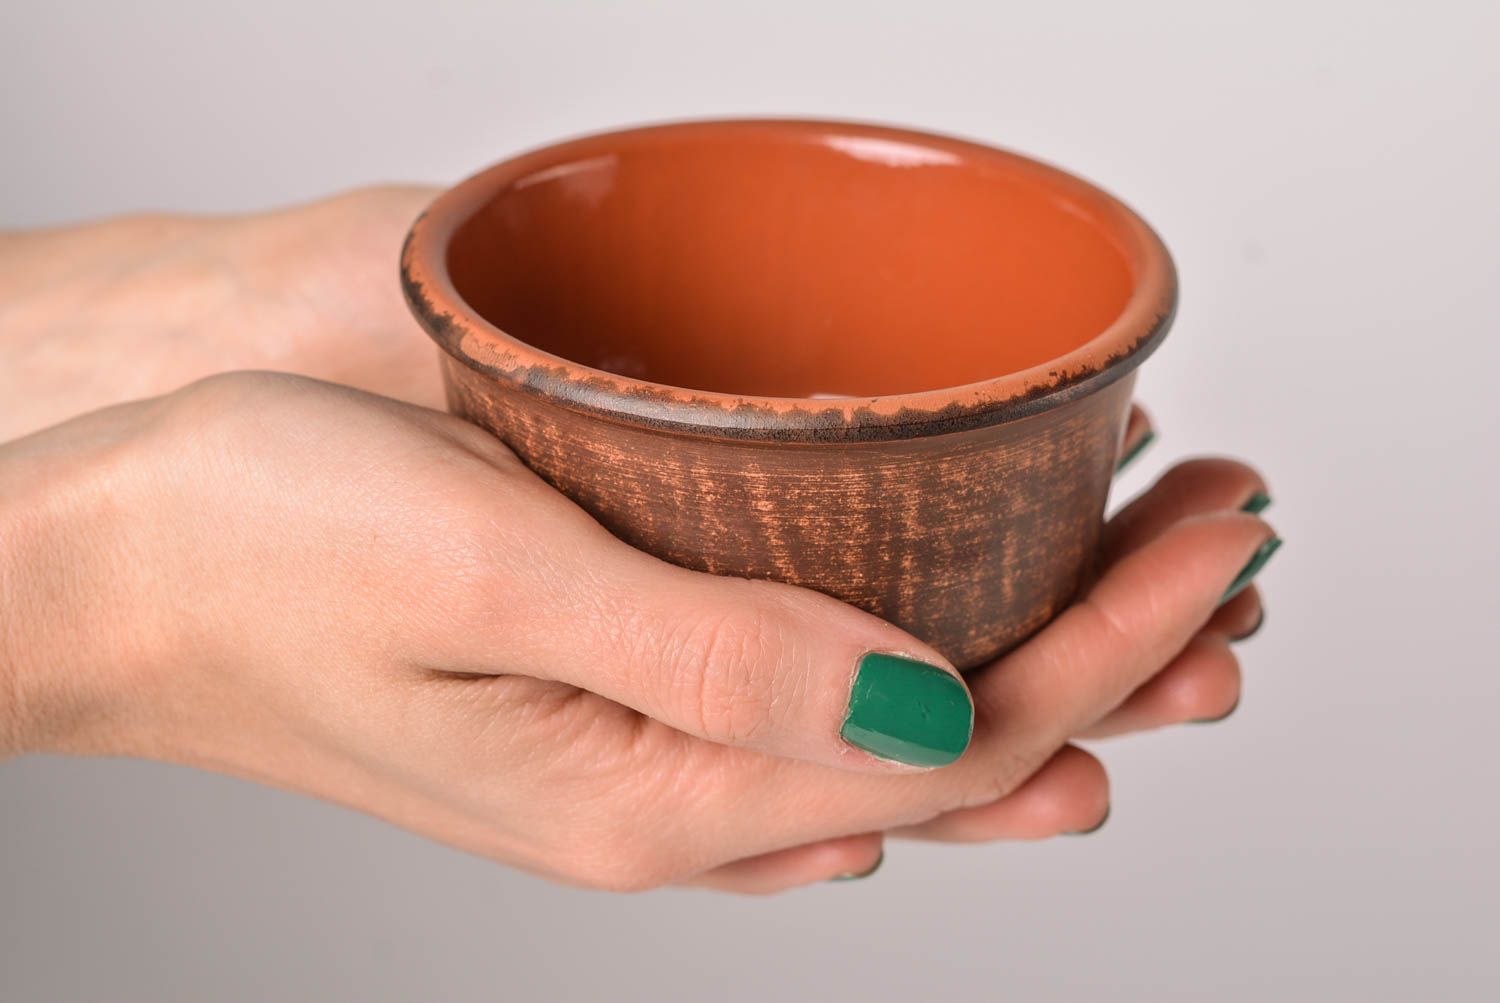 Small handmade ceramic salt shaker ceramic bowl kitchen utensils spice pot ideas photo 2